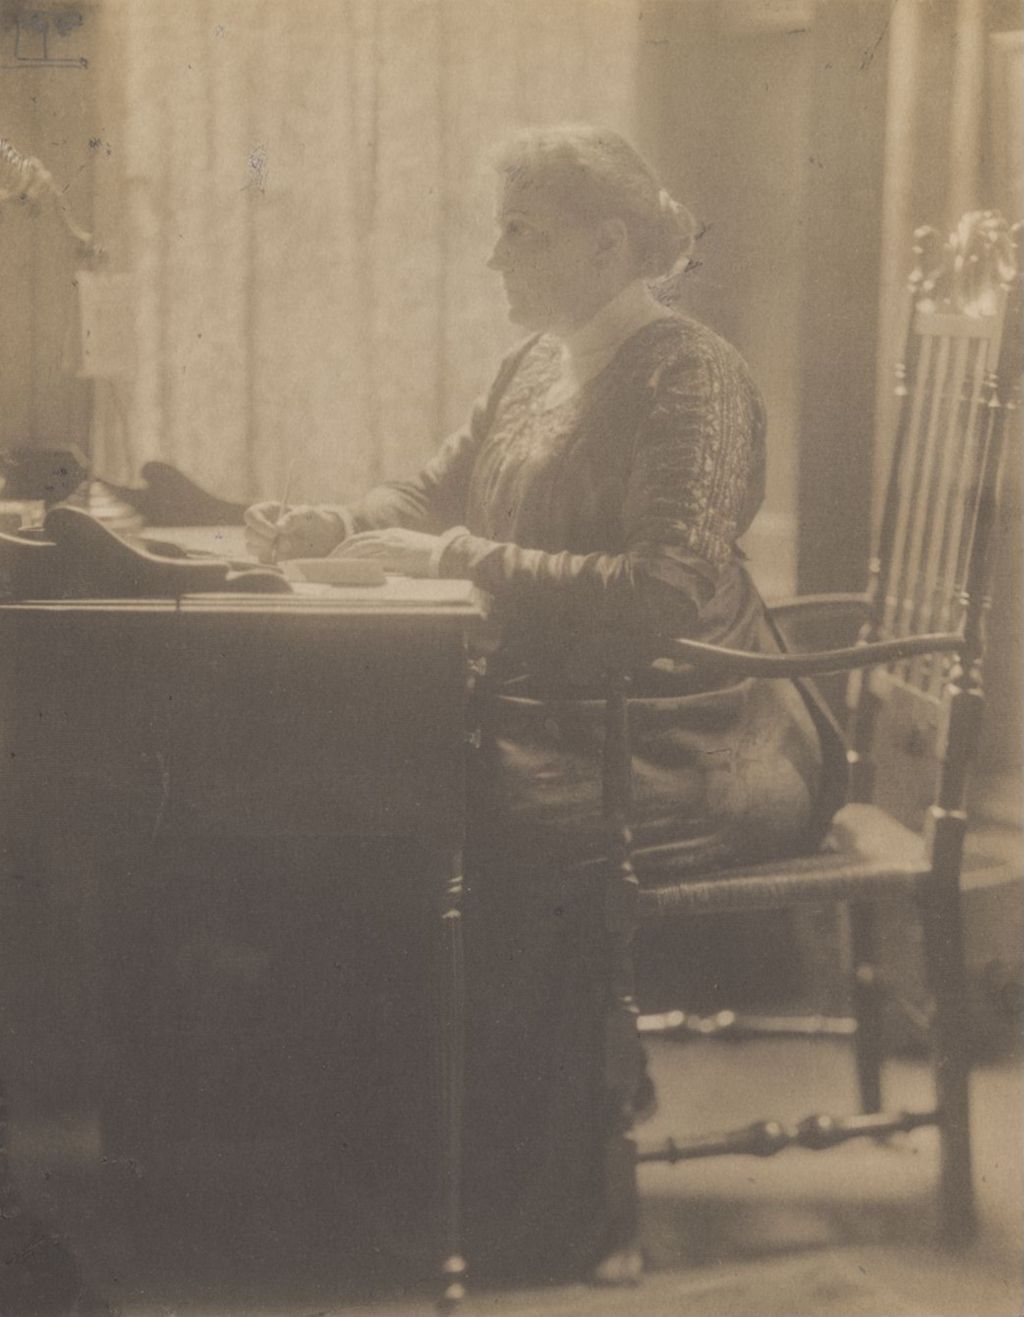 Miniature of Jane Addams writing at a desk